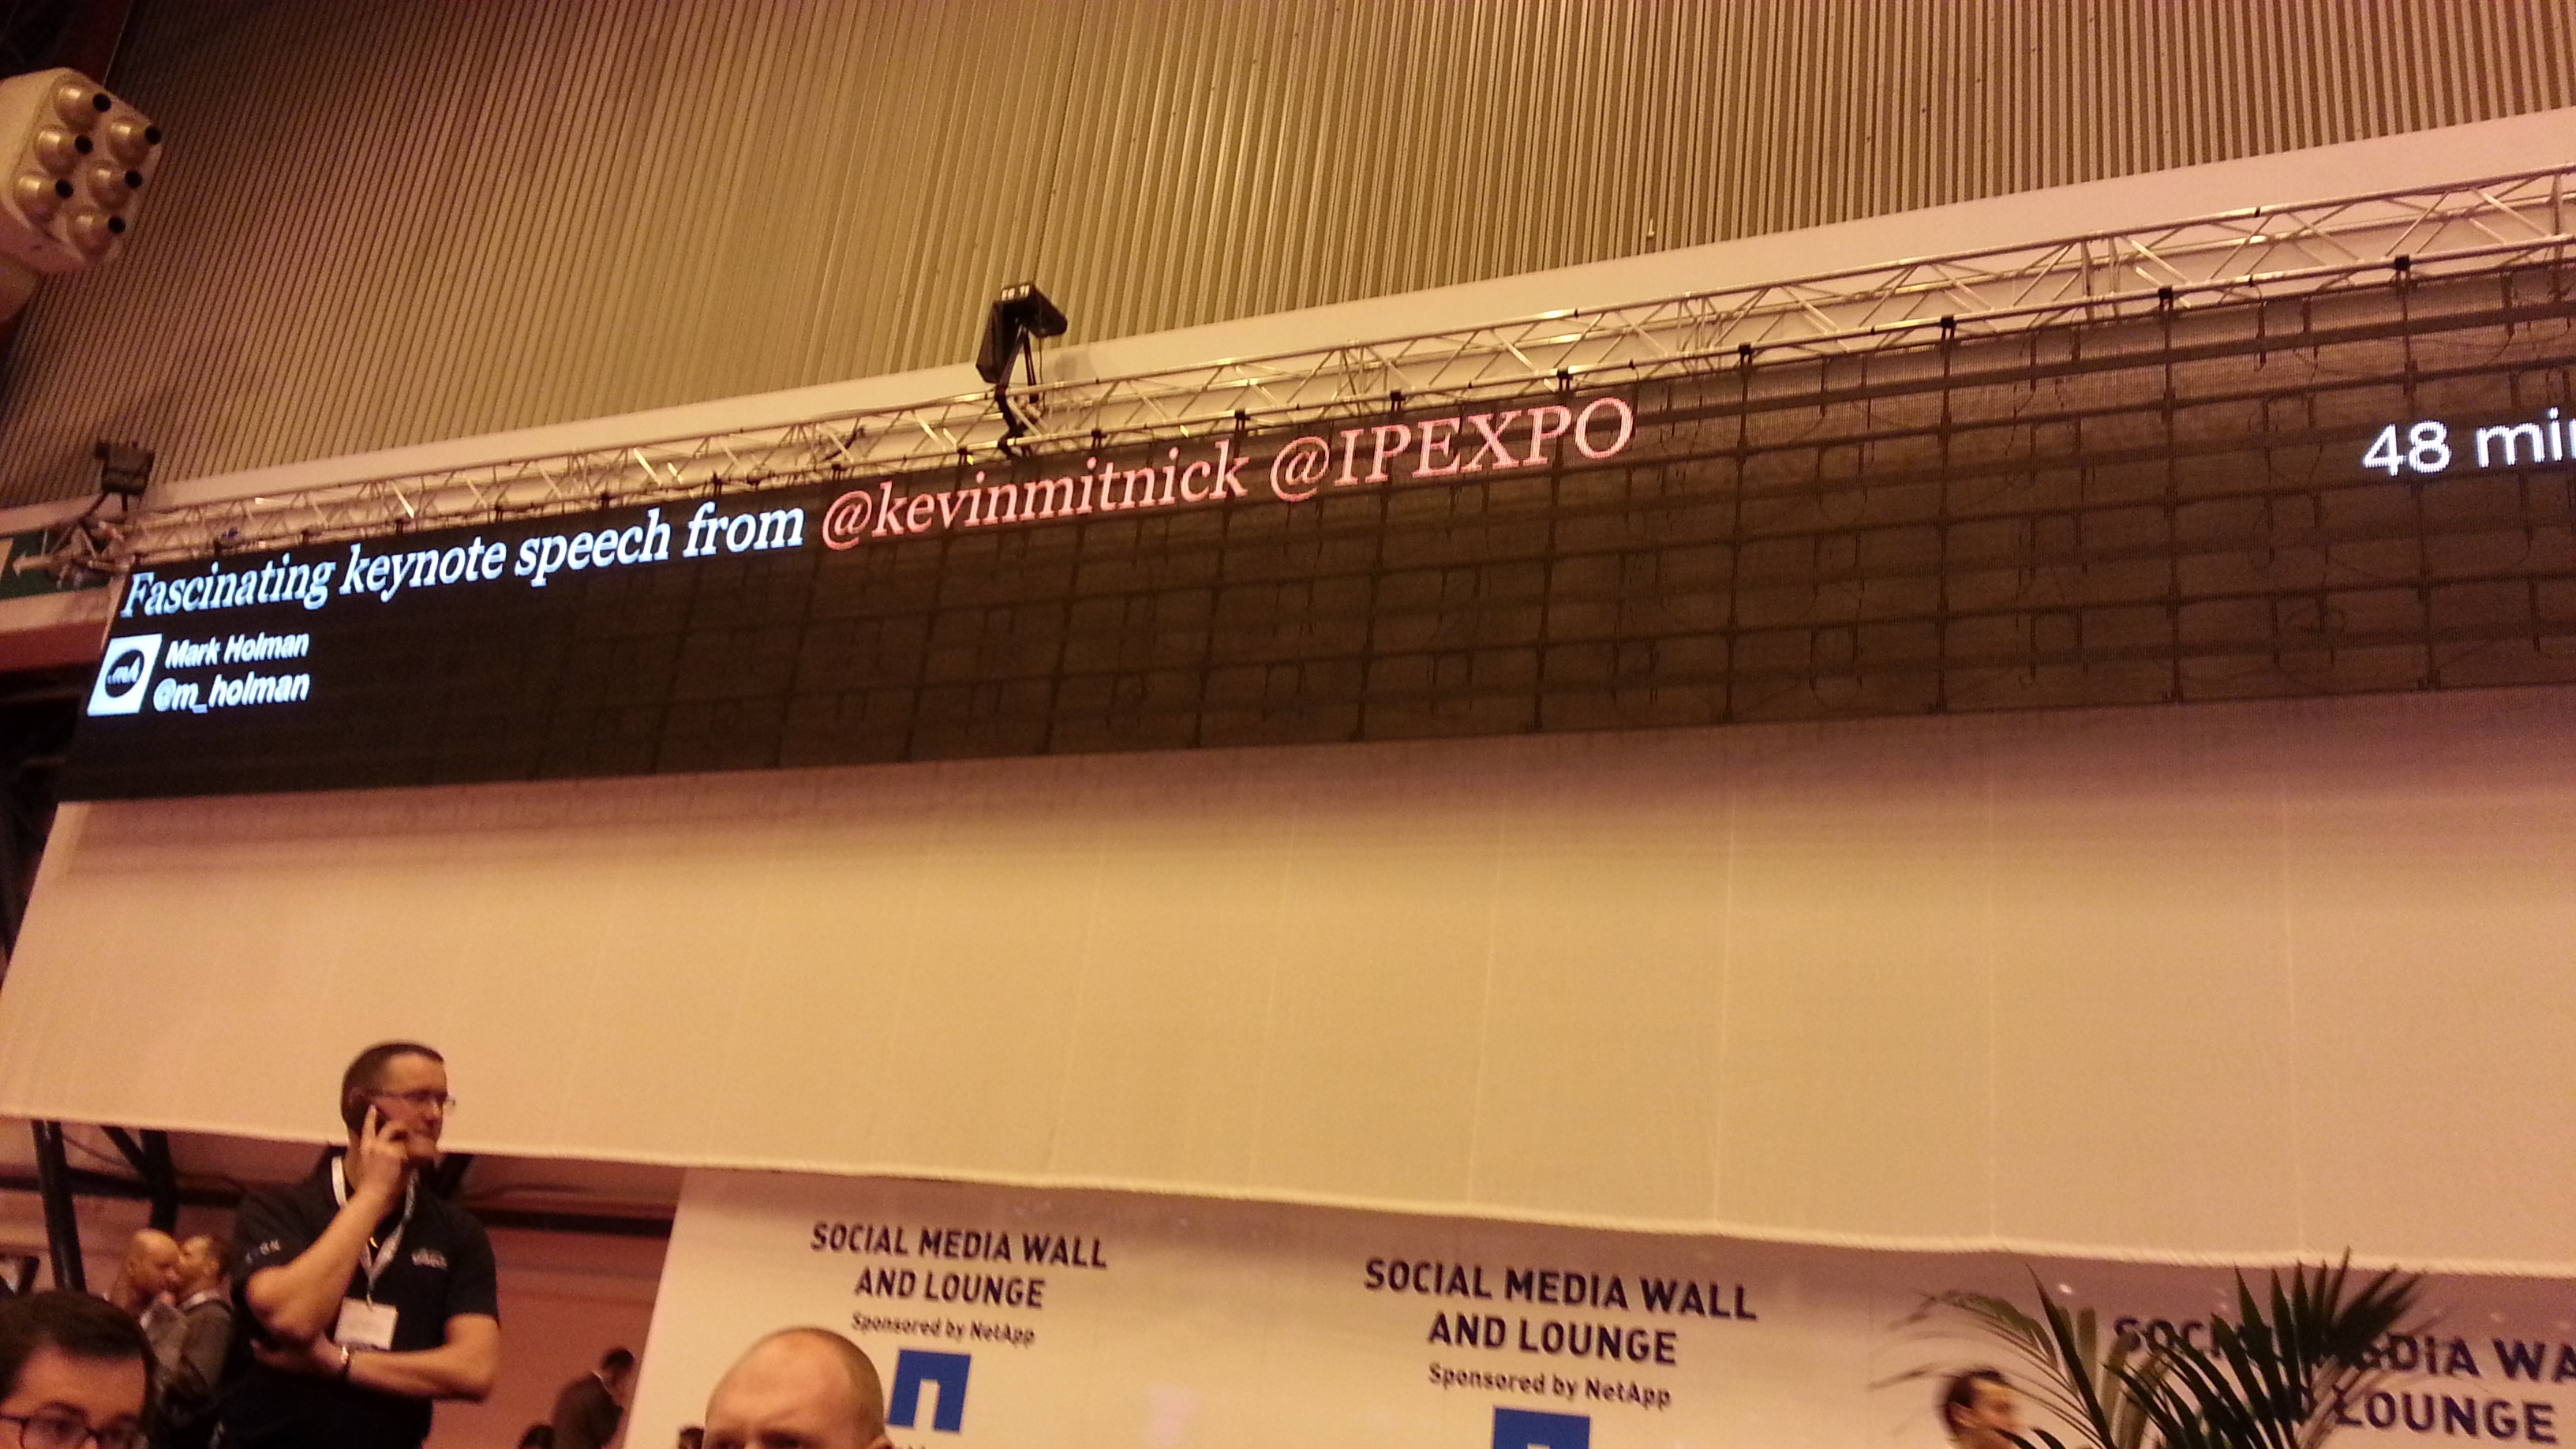 IP EXPO 2013 London twitter wall